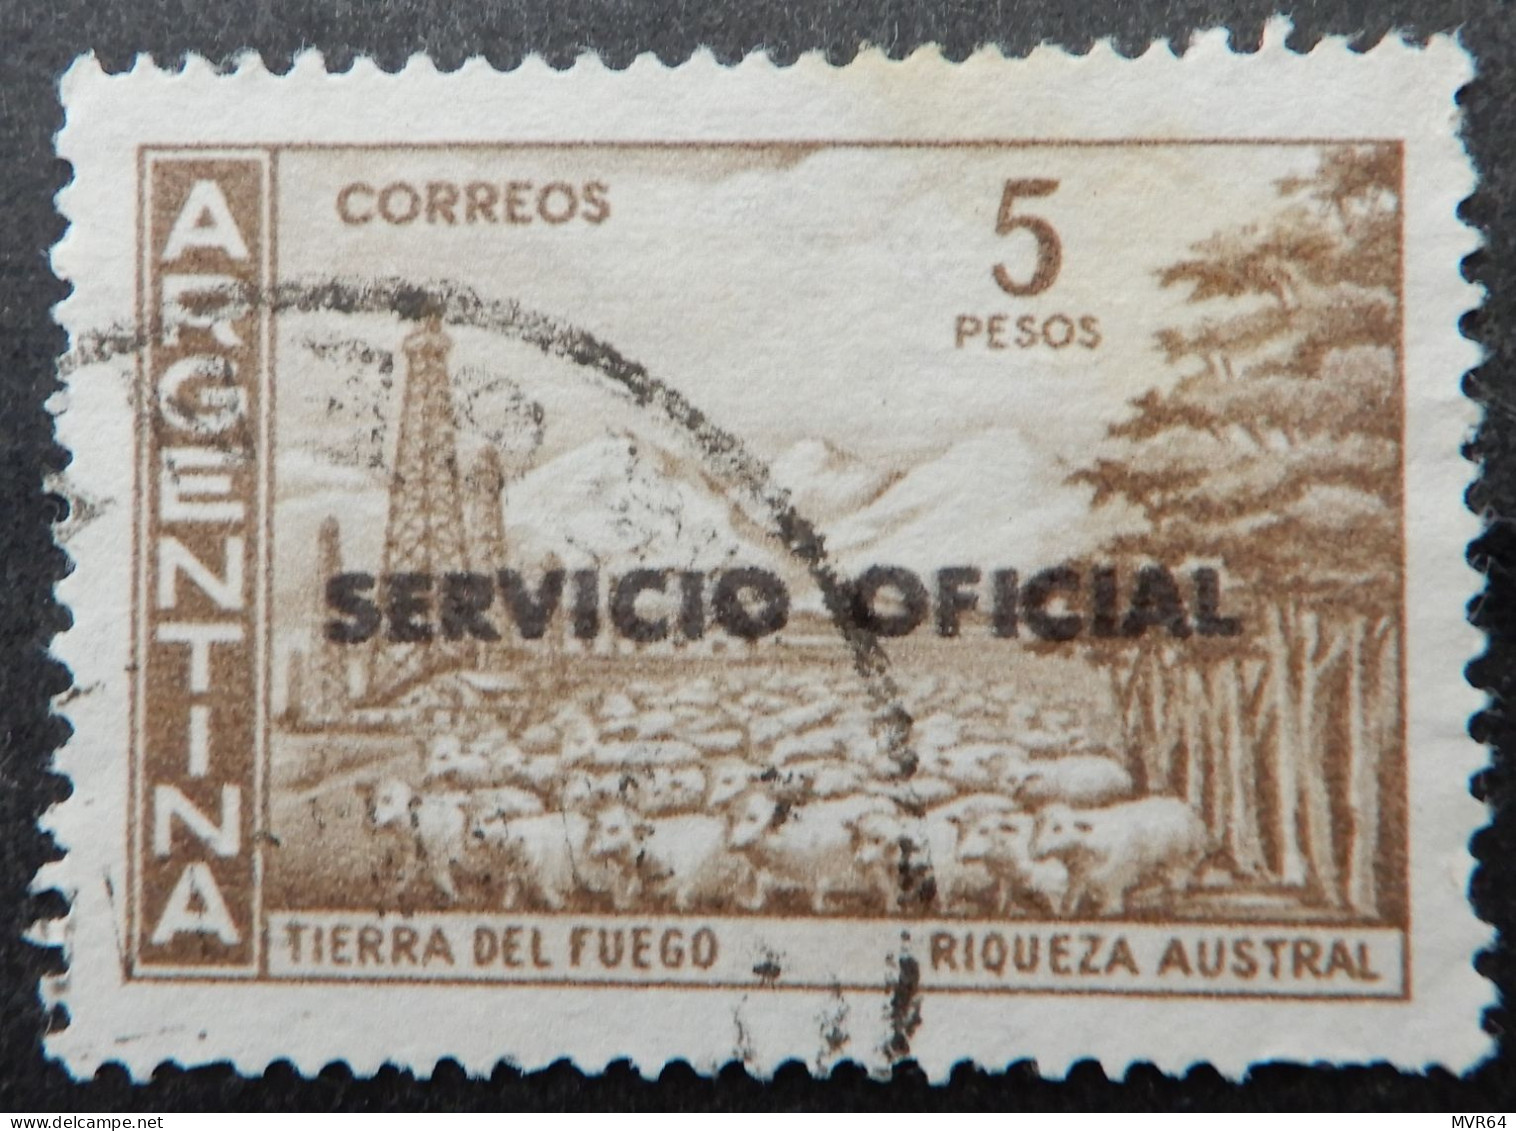 Argentinië Argentinia A 1959 (1) Tierra Del Fuego Riqueza Austral - Used Stamps